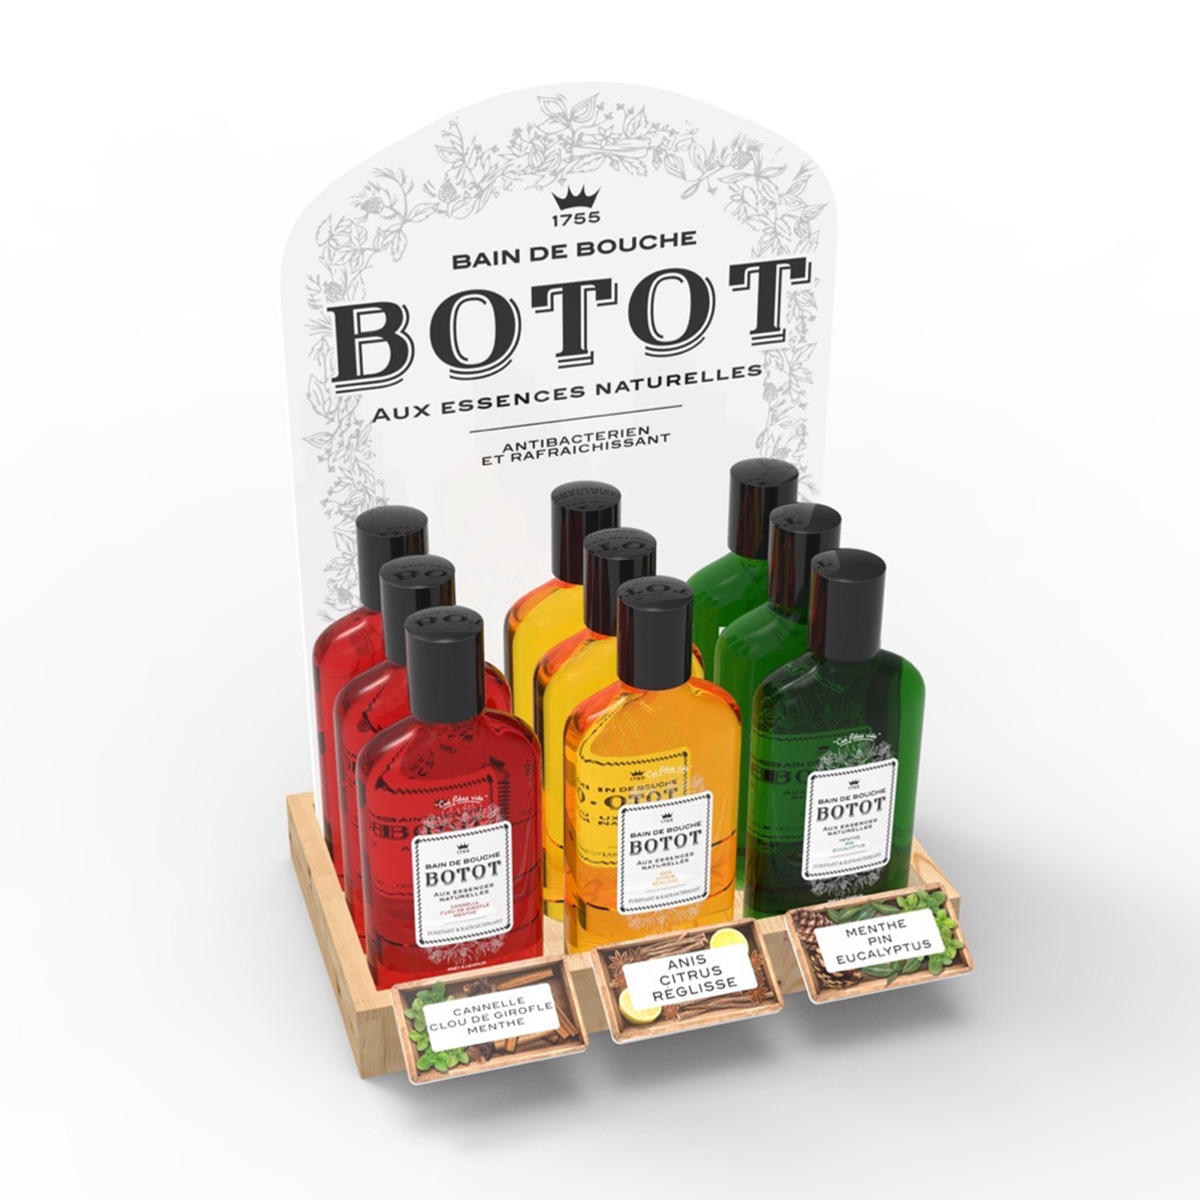 Botot - Identité Visuelle, Packaging & Merchandising